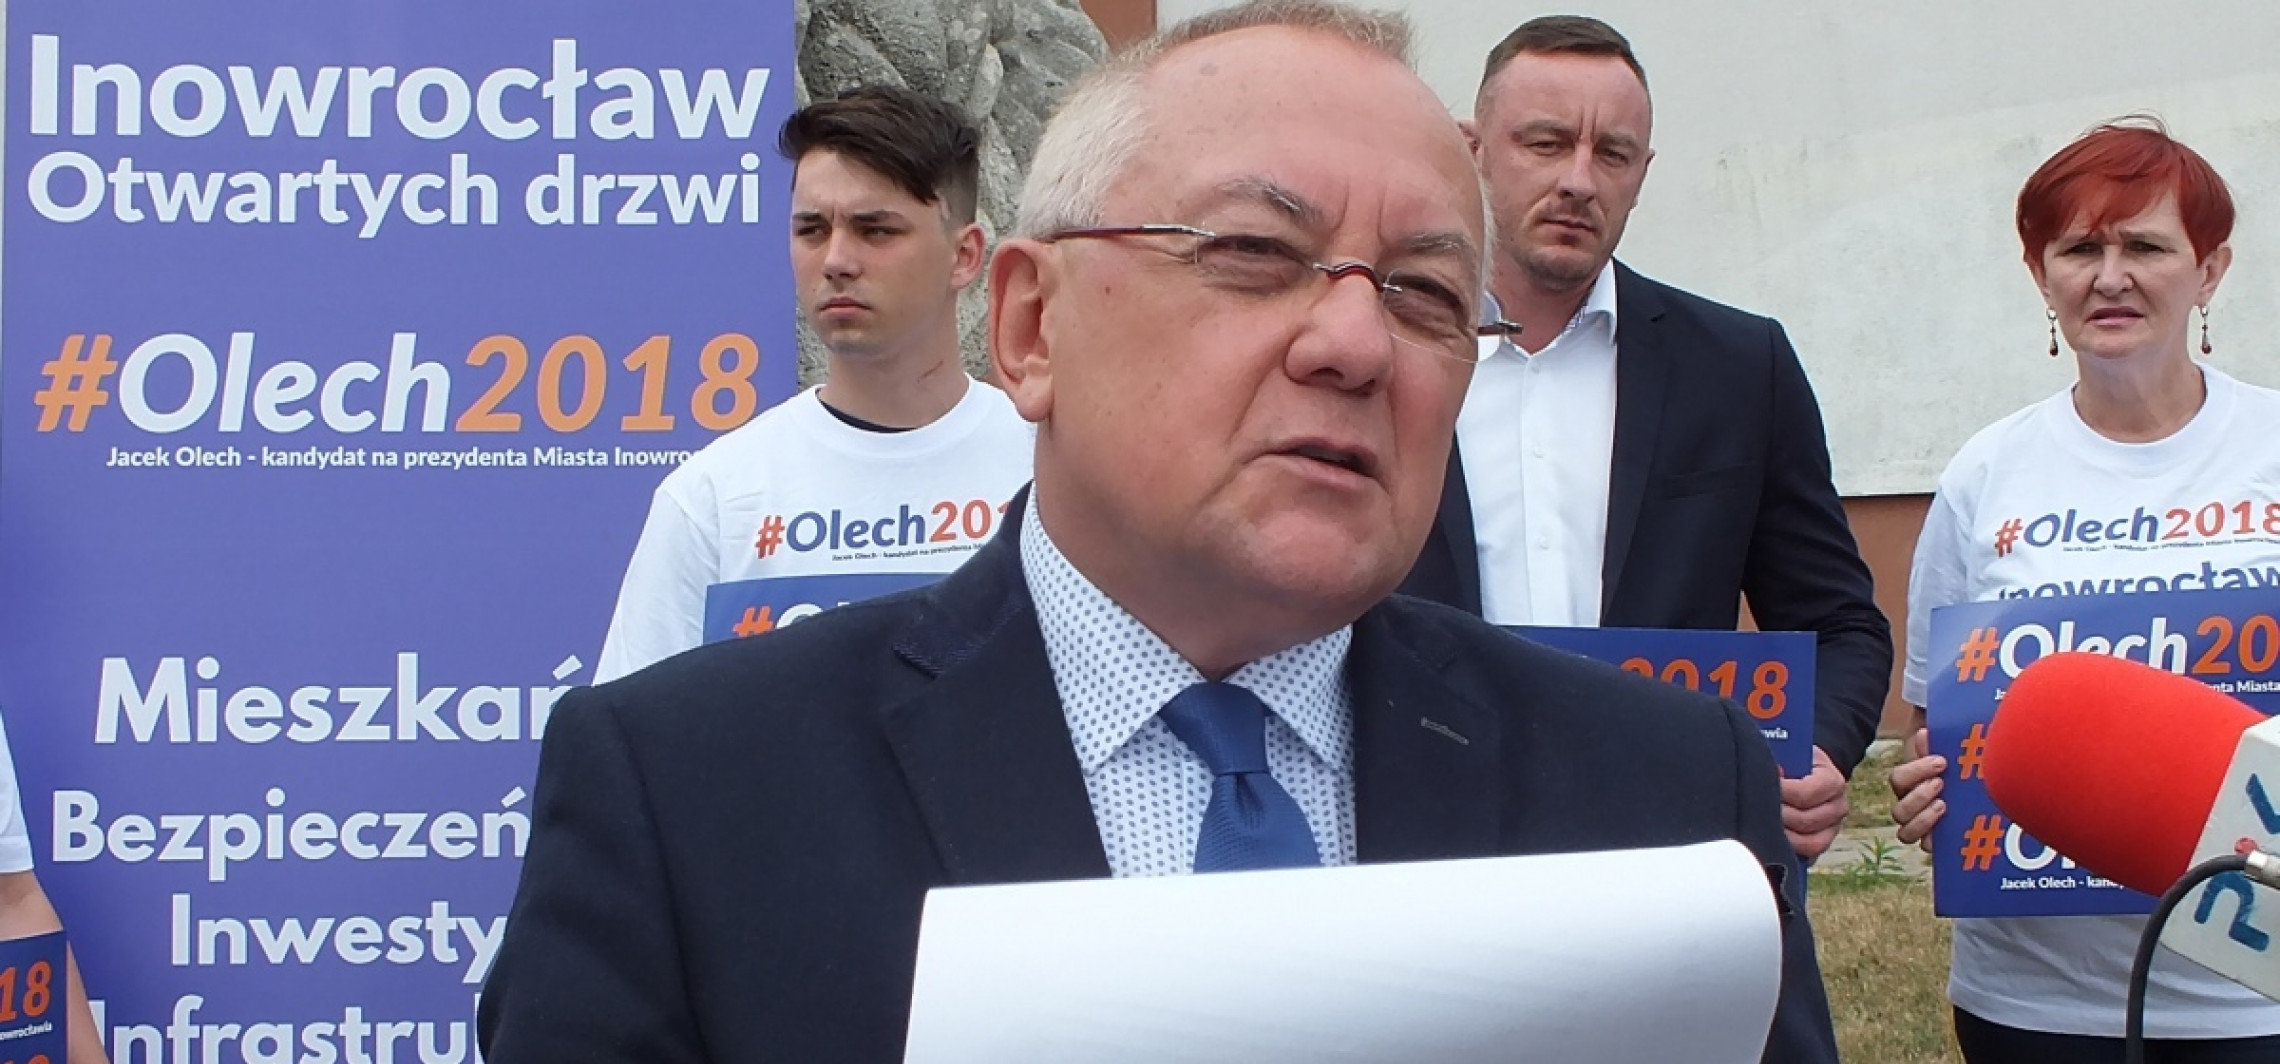 Inowrocław - Jacek Olech składa wniosek do prokuratury